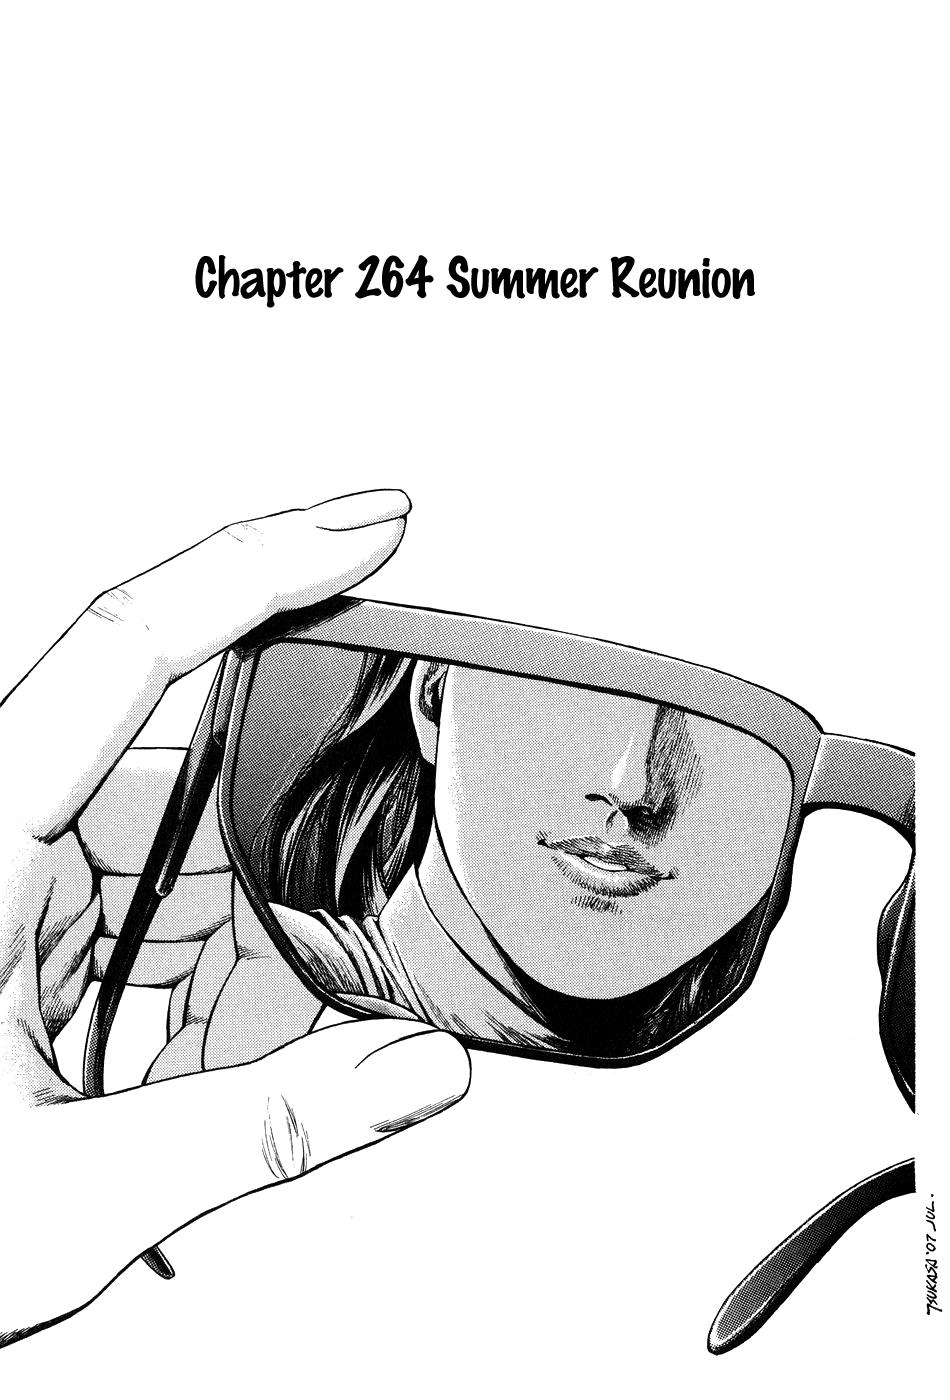 Read Light Vs Shadow Chapter 44 : Reunion on Mangakakalot